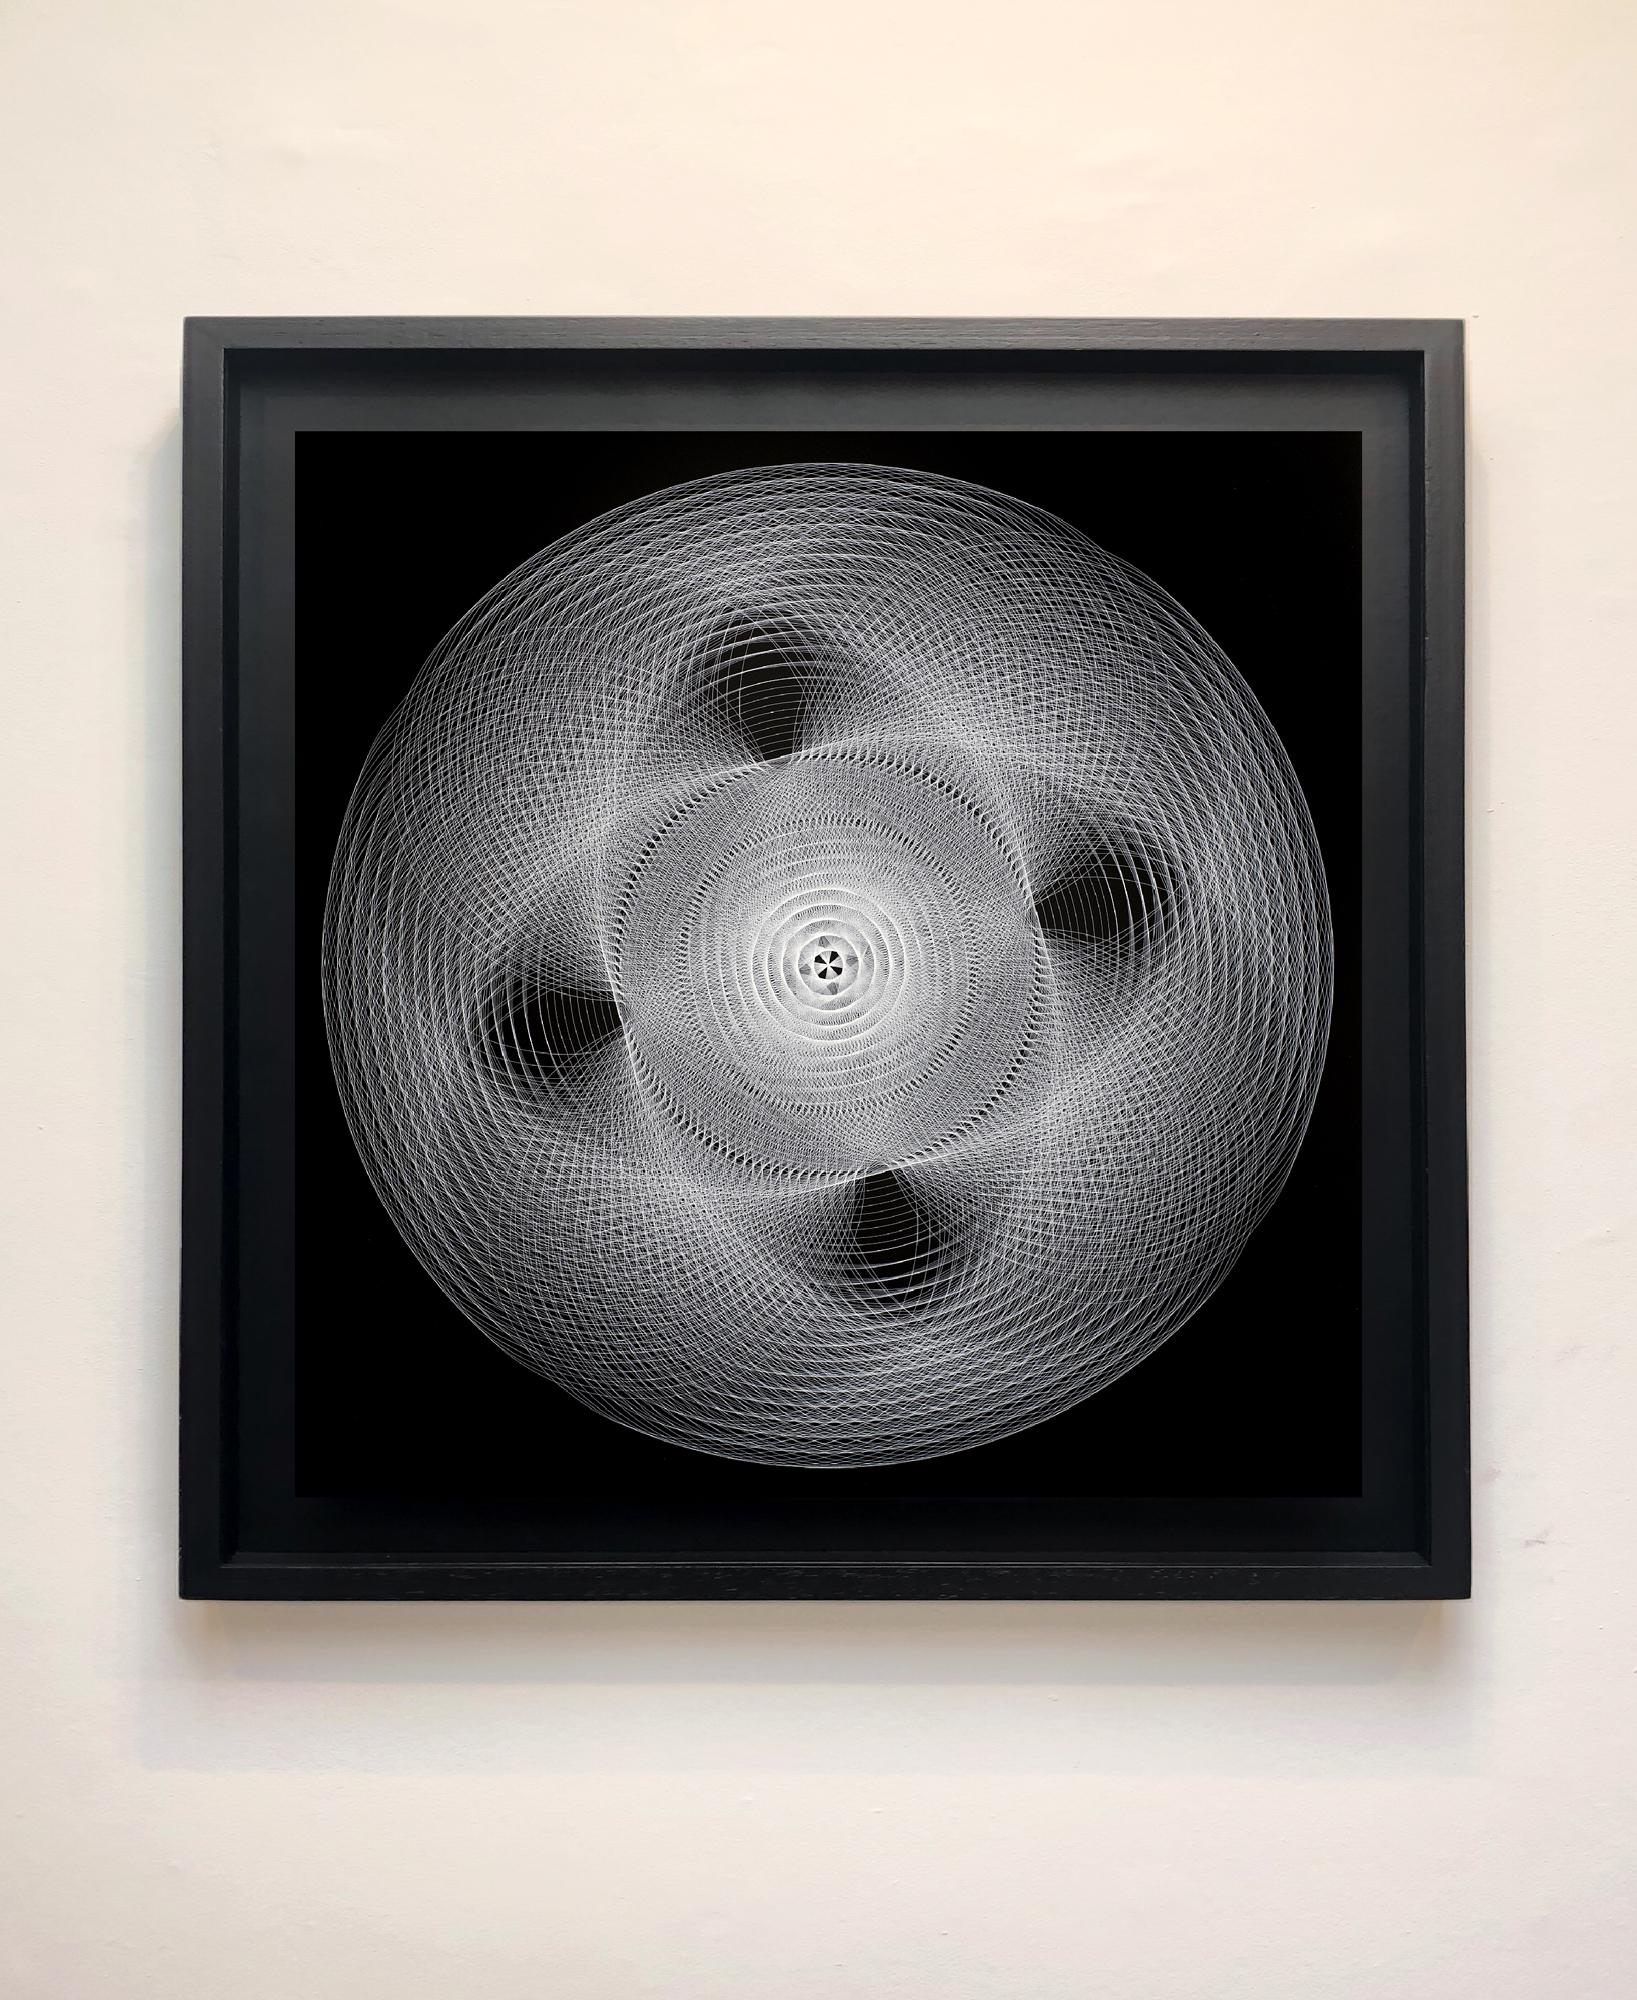 Vortex - Abstract Geometric Painting by Sebastien Preschoux